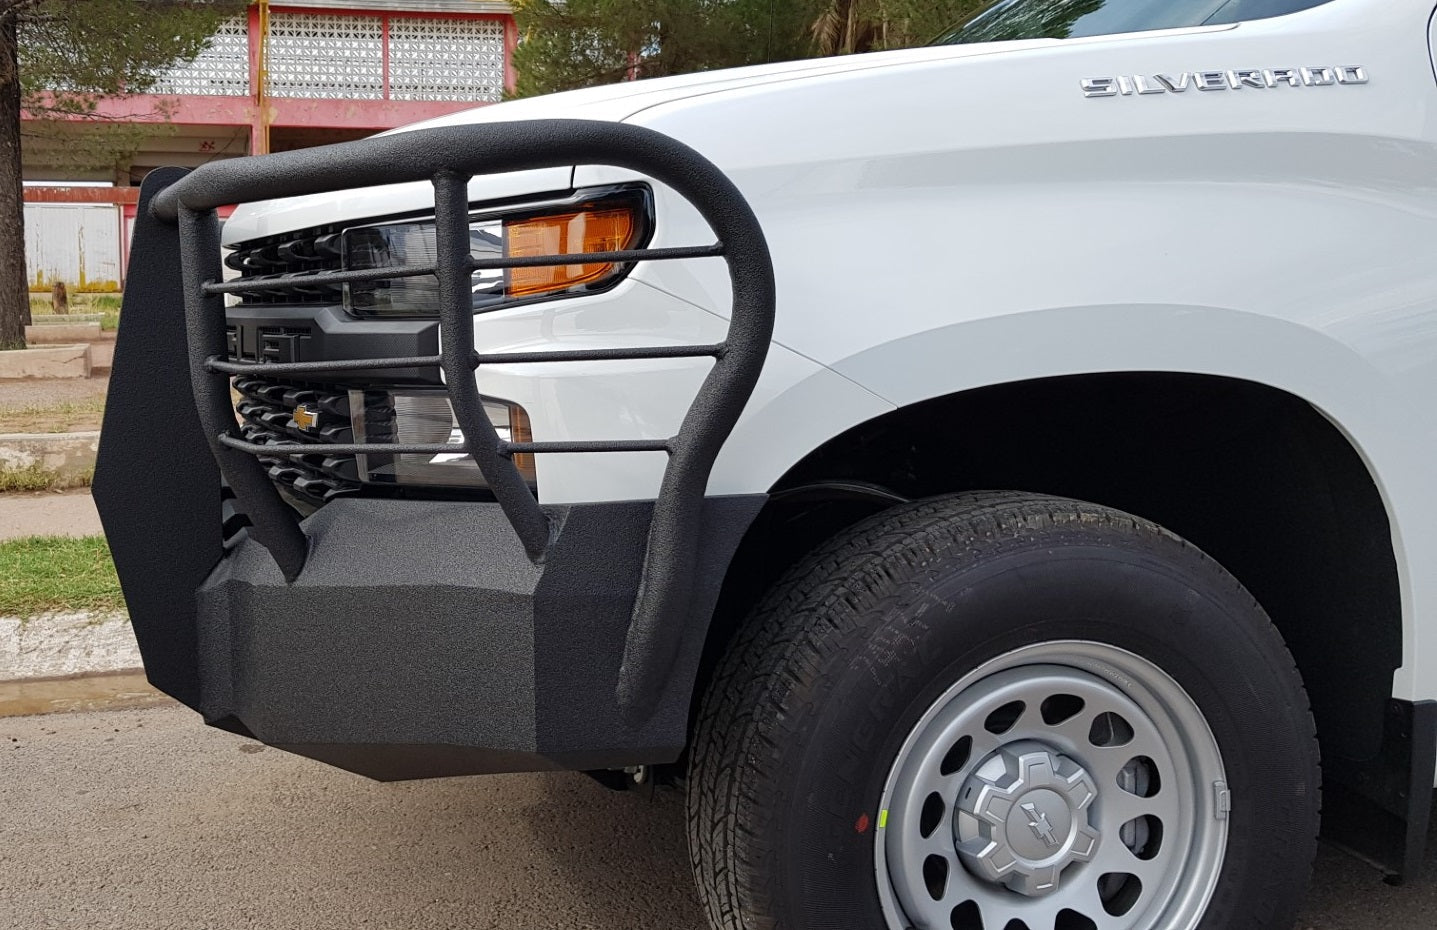 2019-2021 Chevrolet Silverado 1500 Front Bumper | Parking Sensor Cutouts Available - Iron Bull BumpersFRONT IRON BUMPER